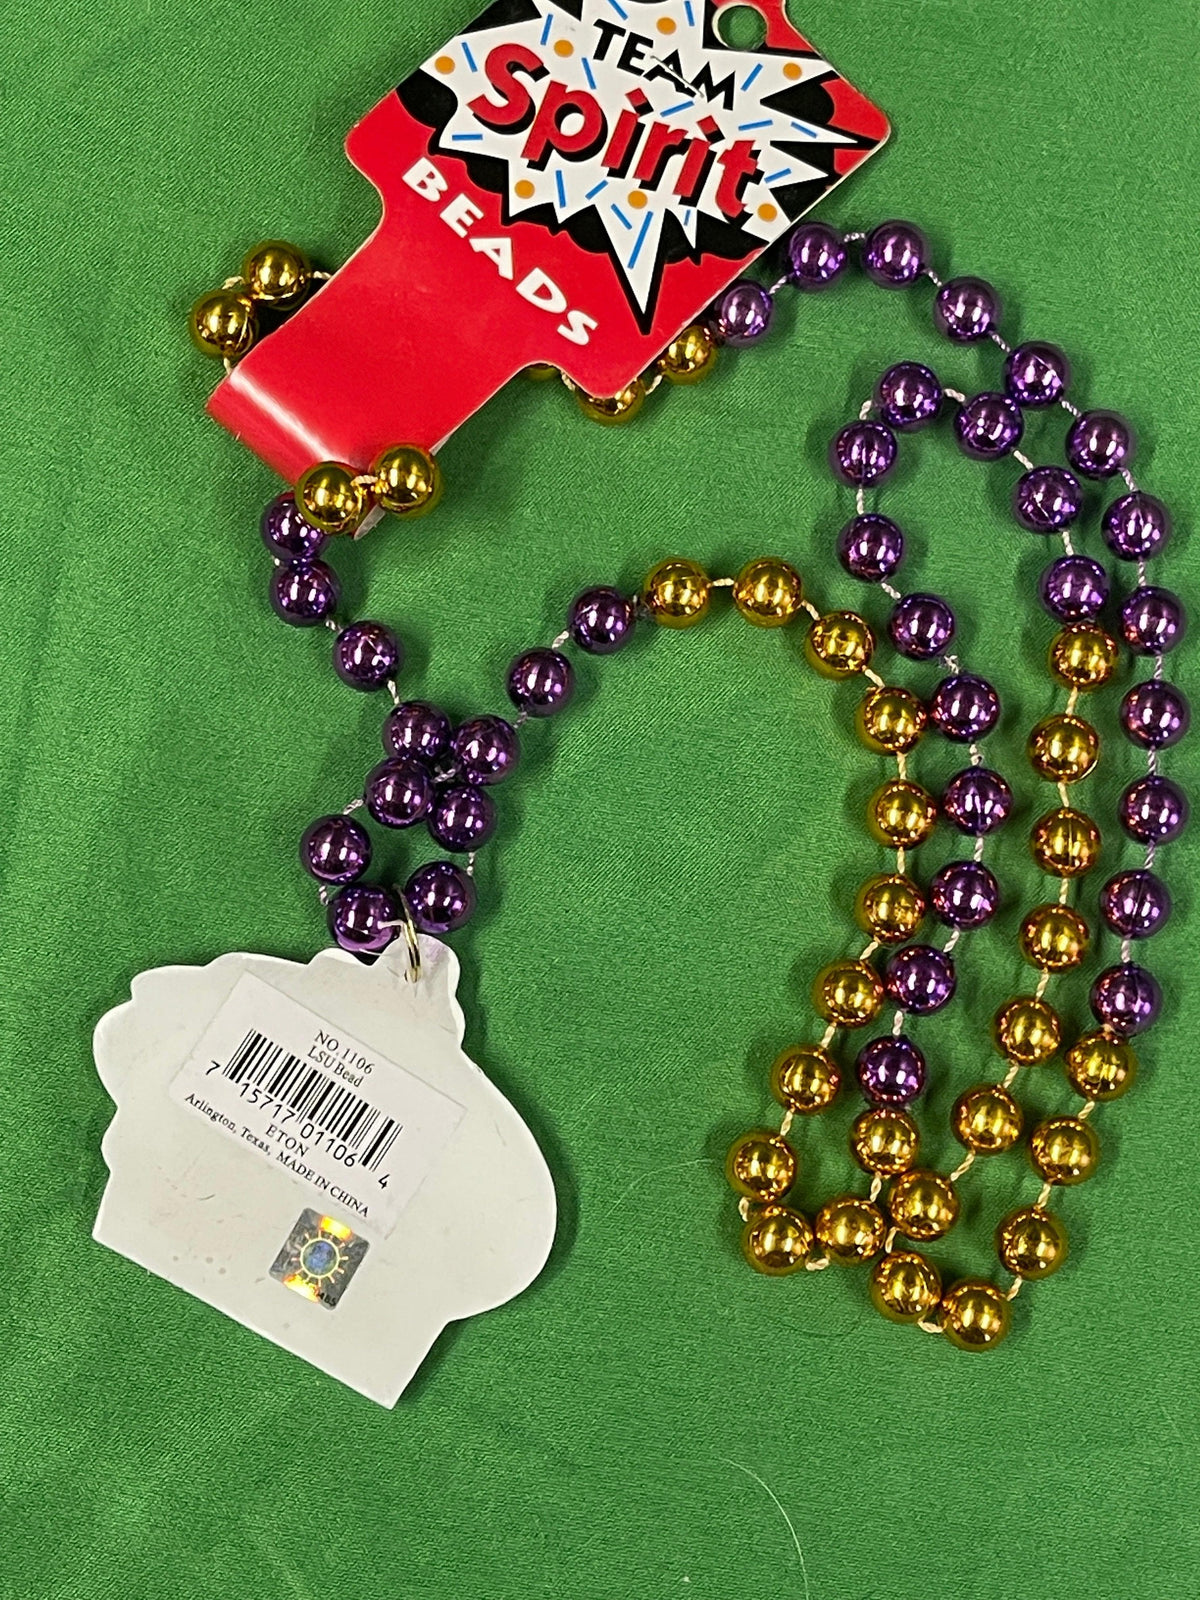 NCAA Louisiana State LSU Tigers Mardi-Gras Style Beads Necklace NWT